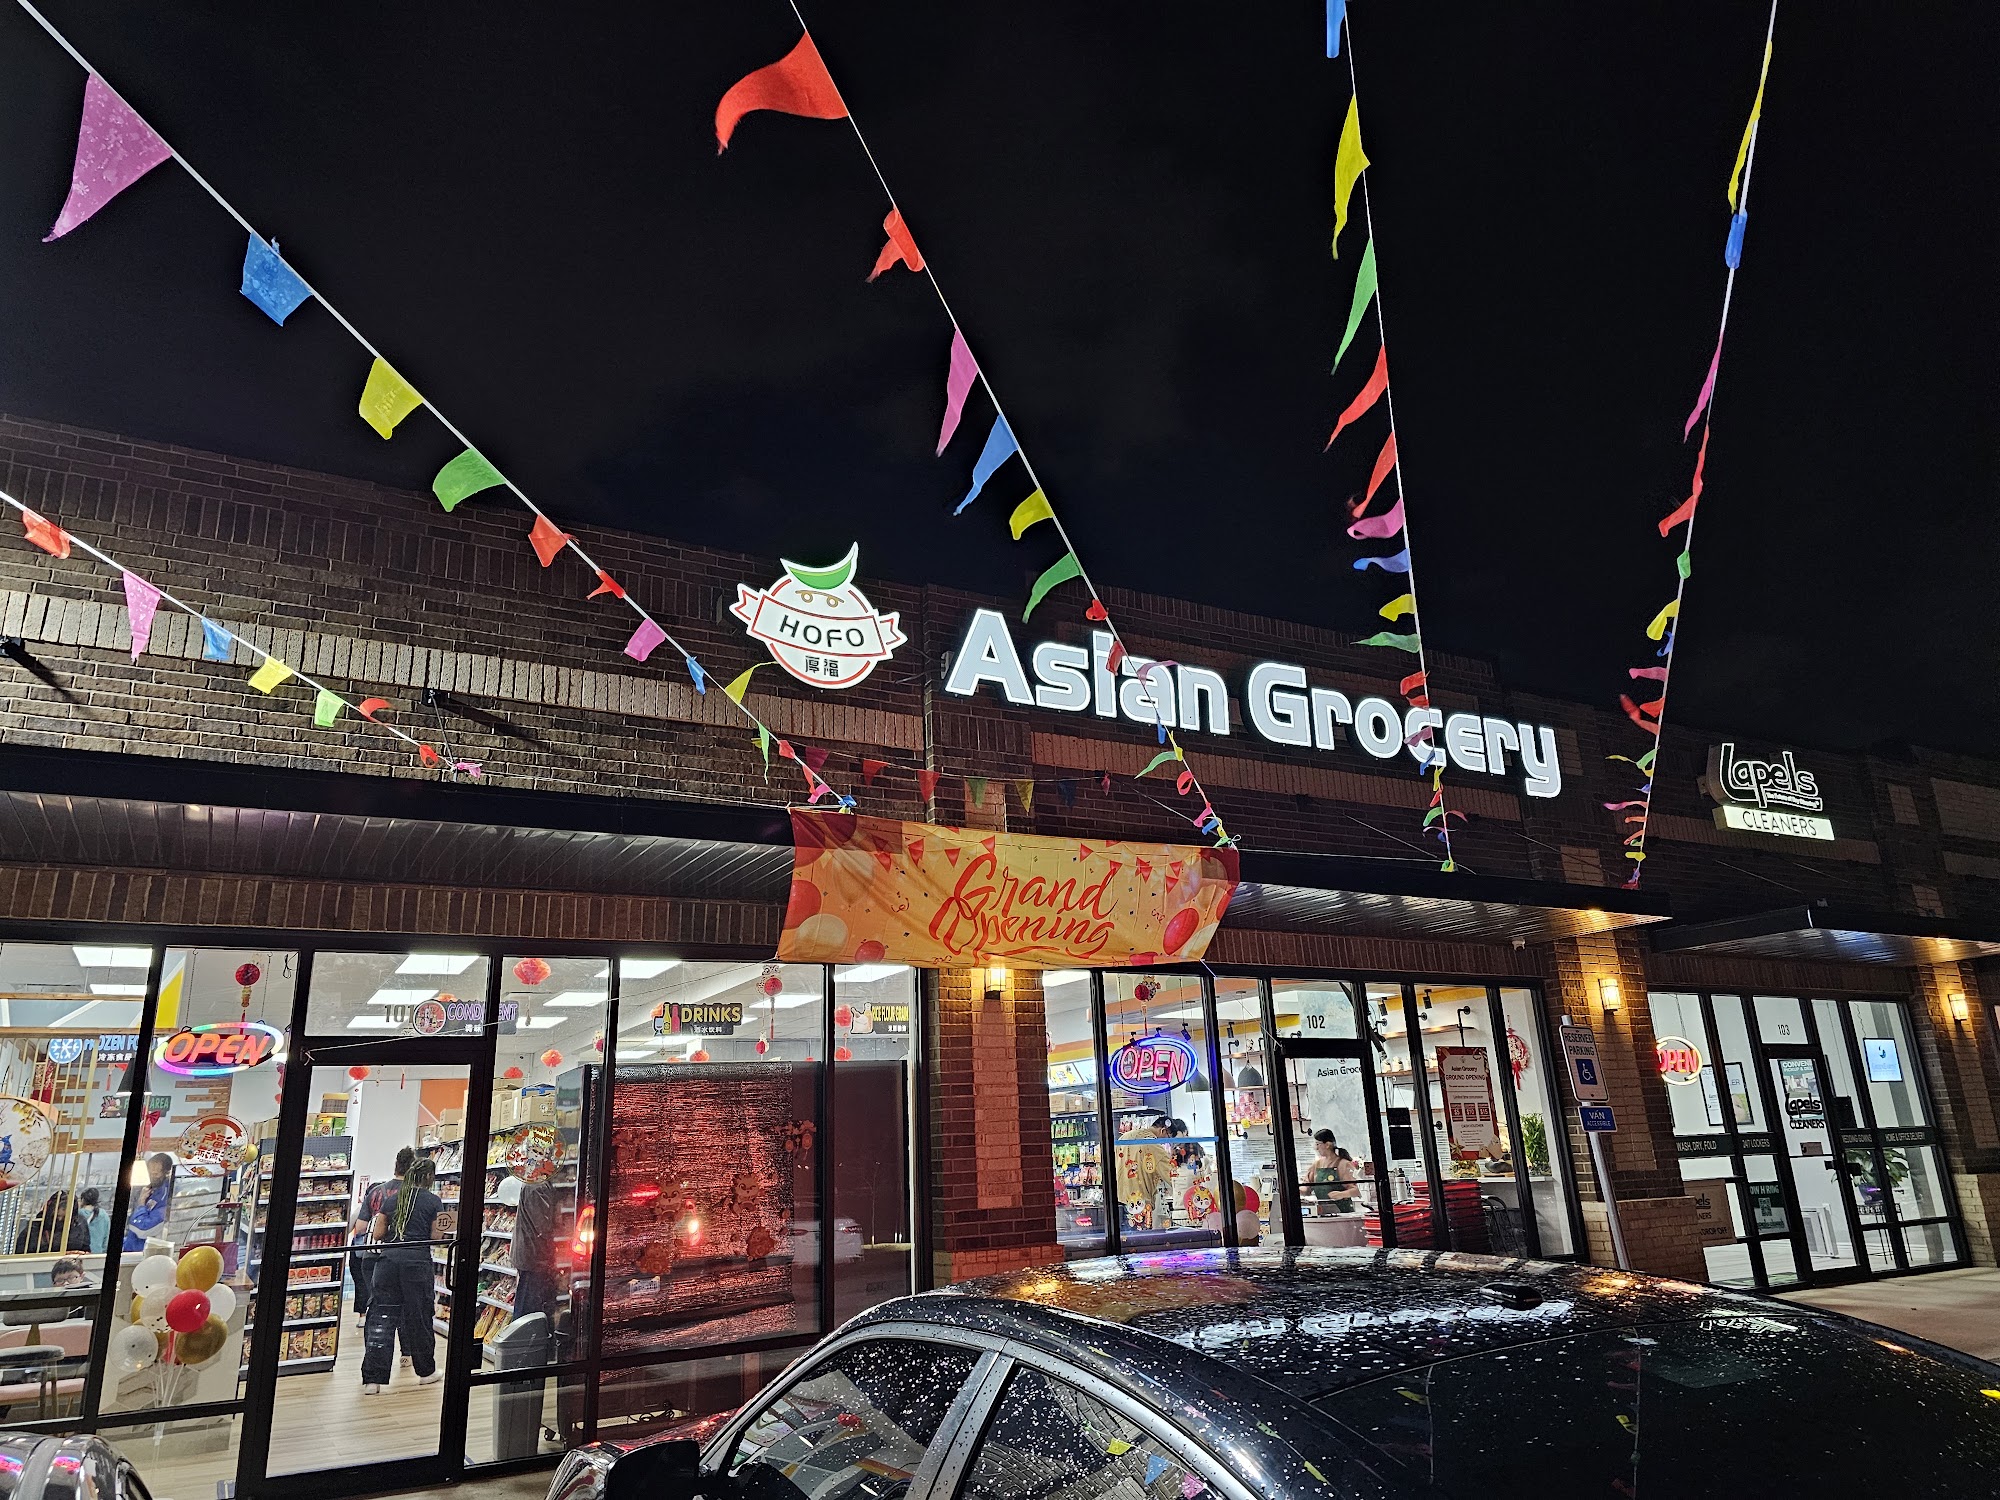 Hofo Asian Grocery